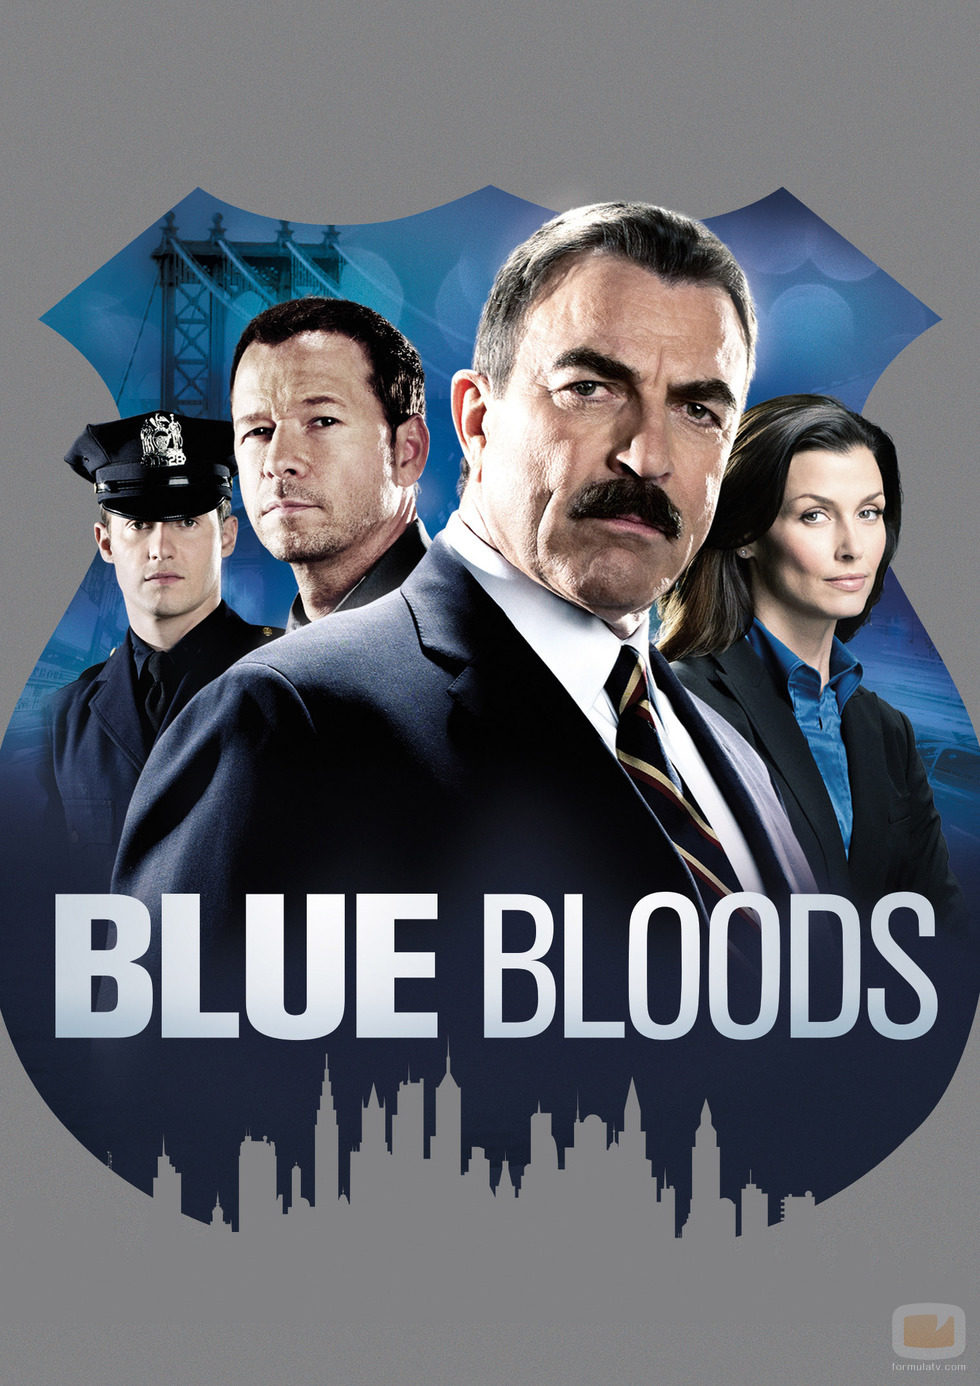 'Blue bloods' vuelve a FDF con una segunda temporada